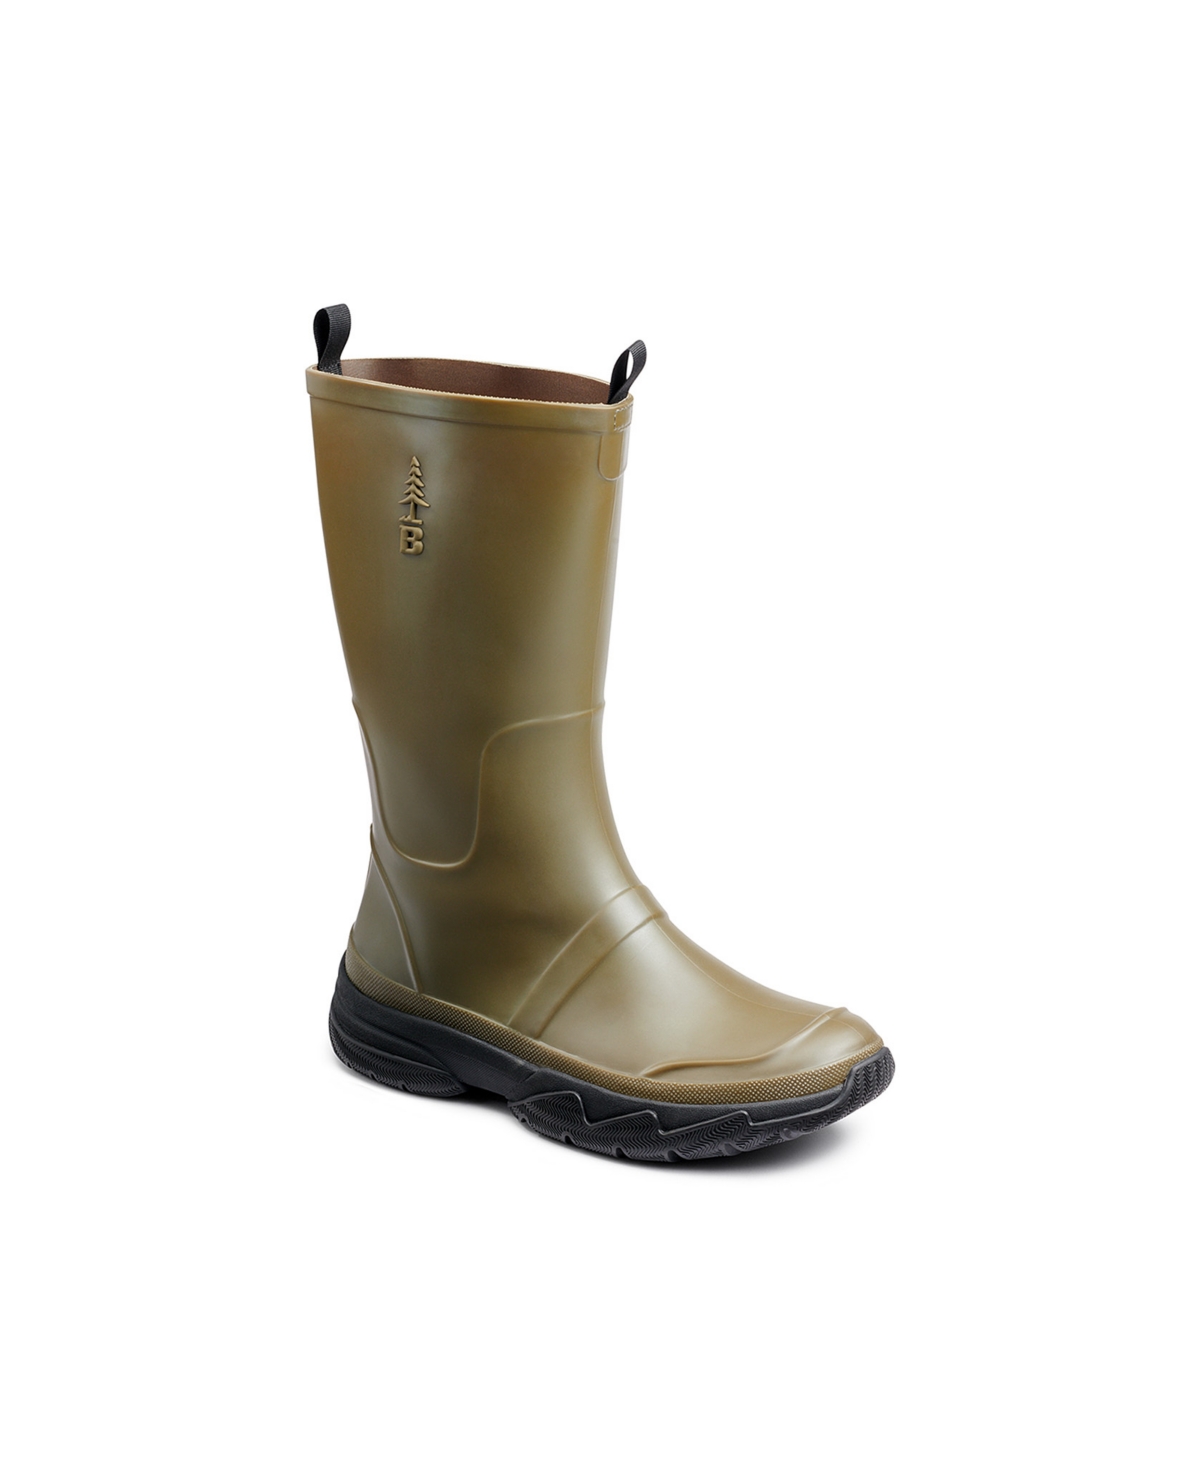 Men's Field Water Resistant Rain Boots - Olive